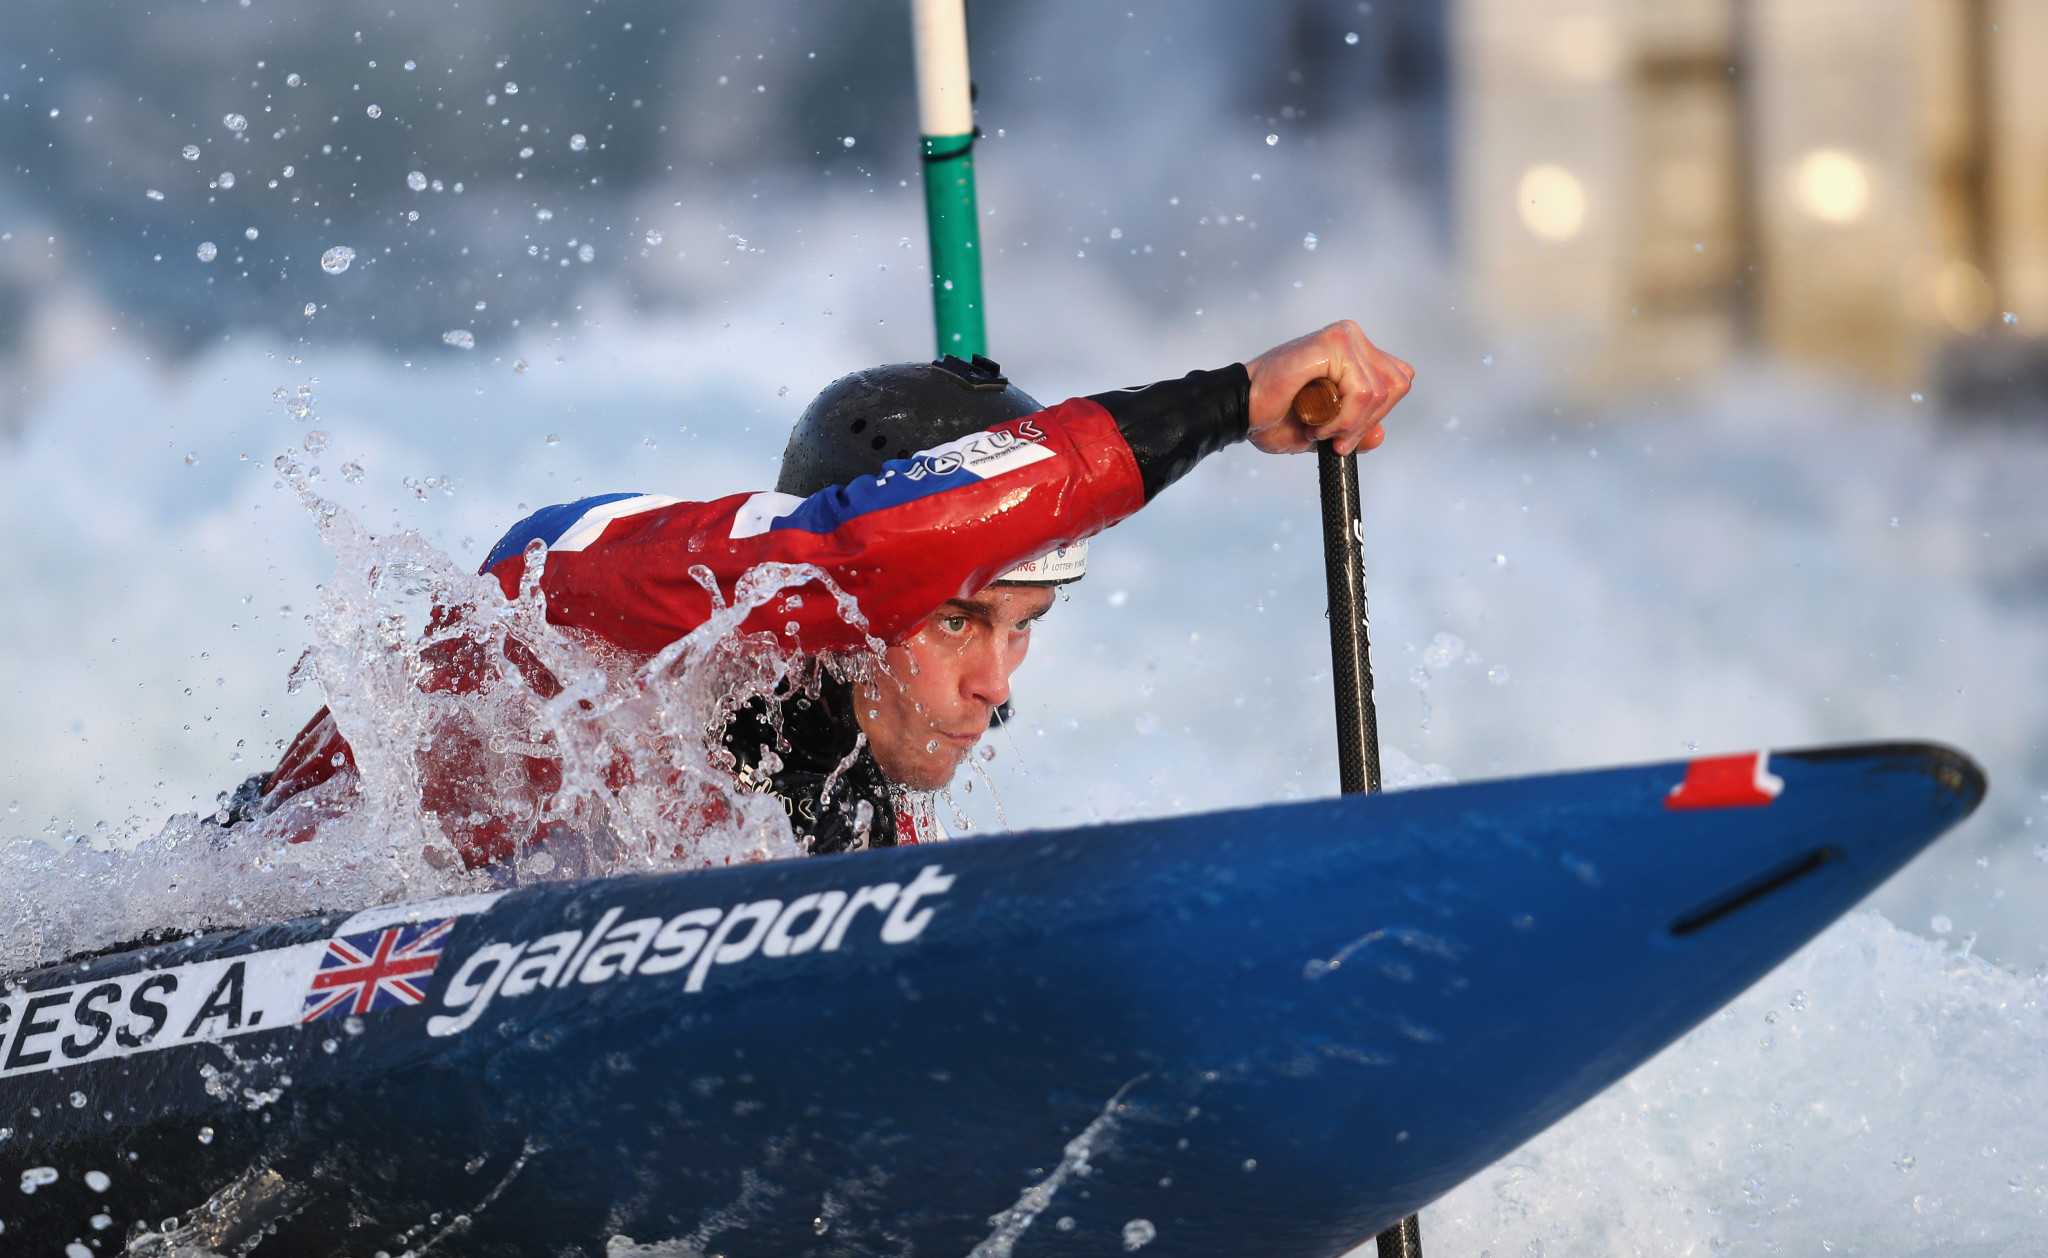 Ivrea, in Italy, will host the 2021 Canoe Slalom European Championships ©Getty Images